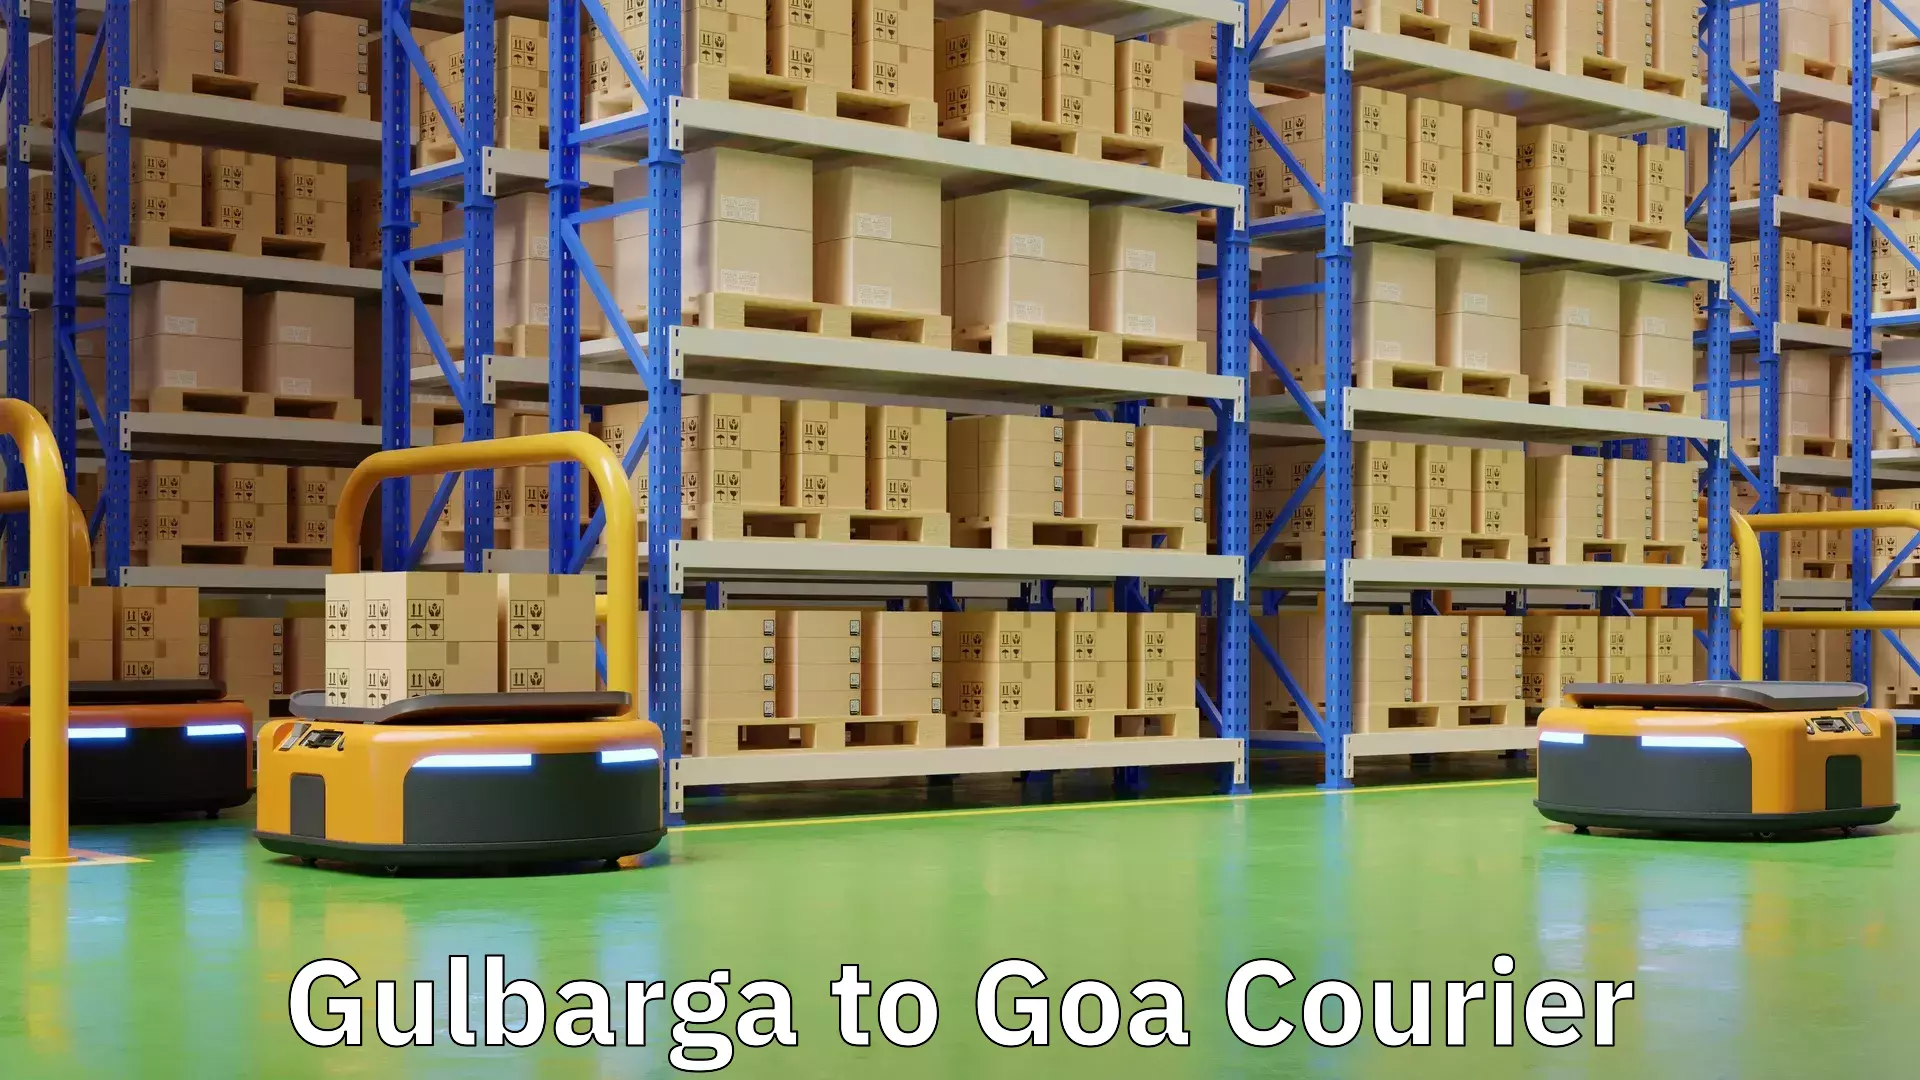 Delivery service partnership Gulbarga to Goa